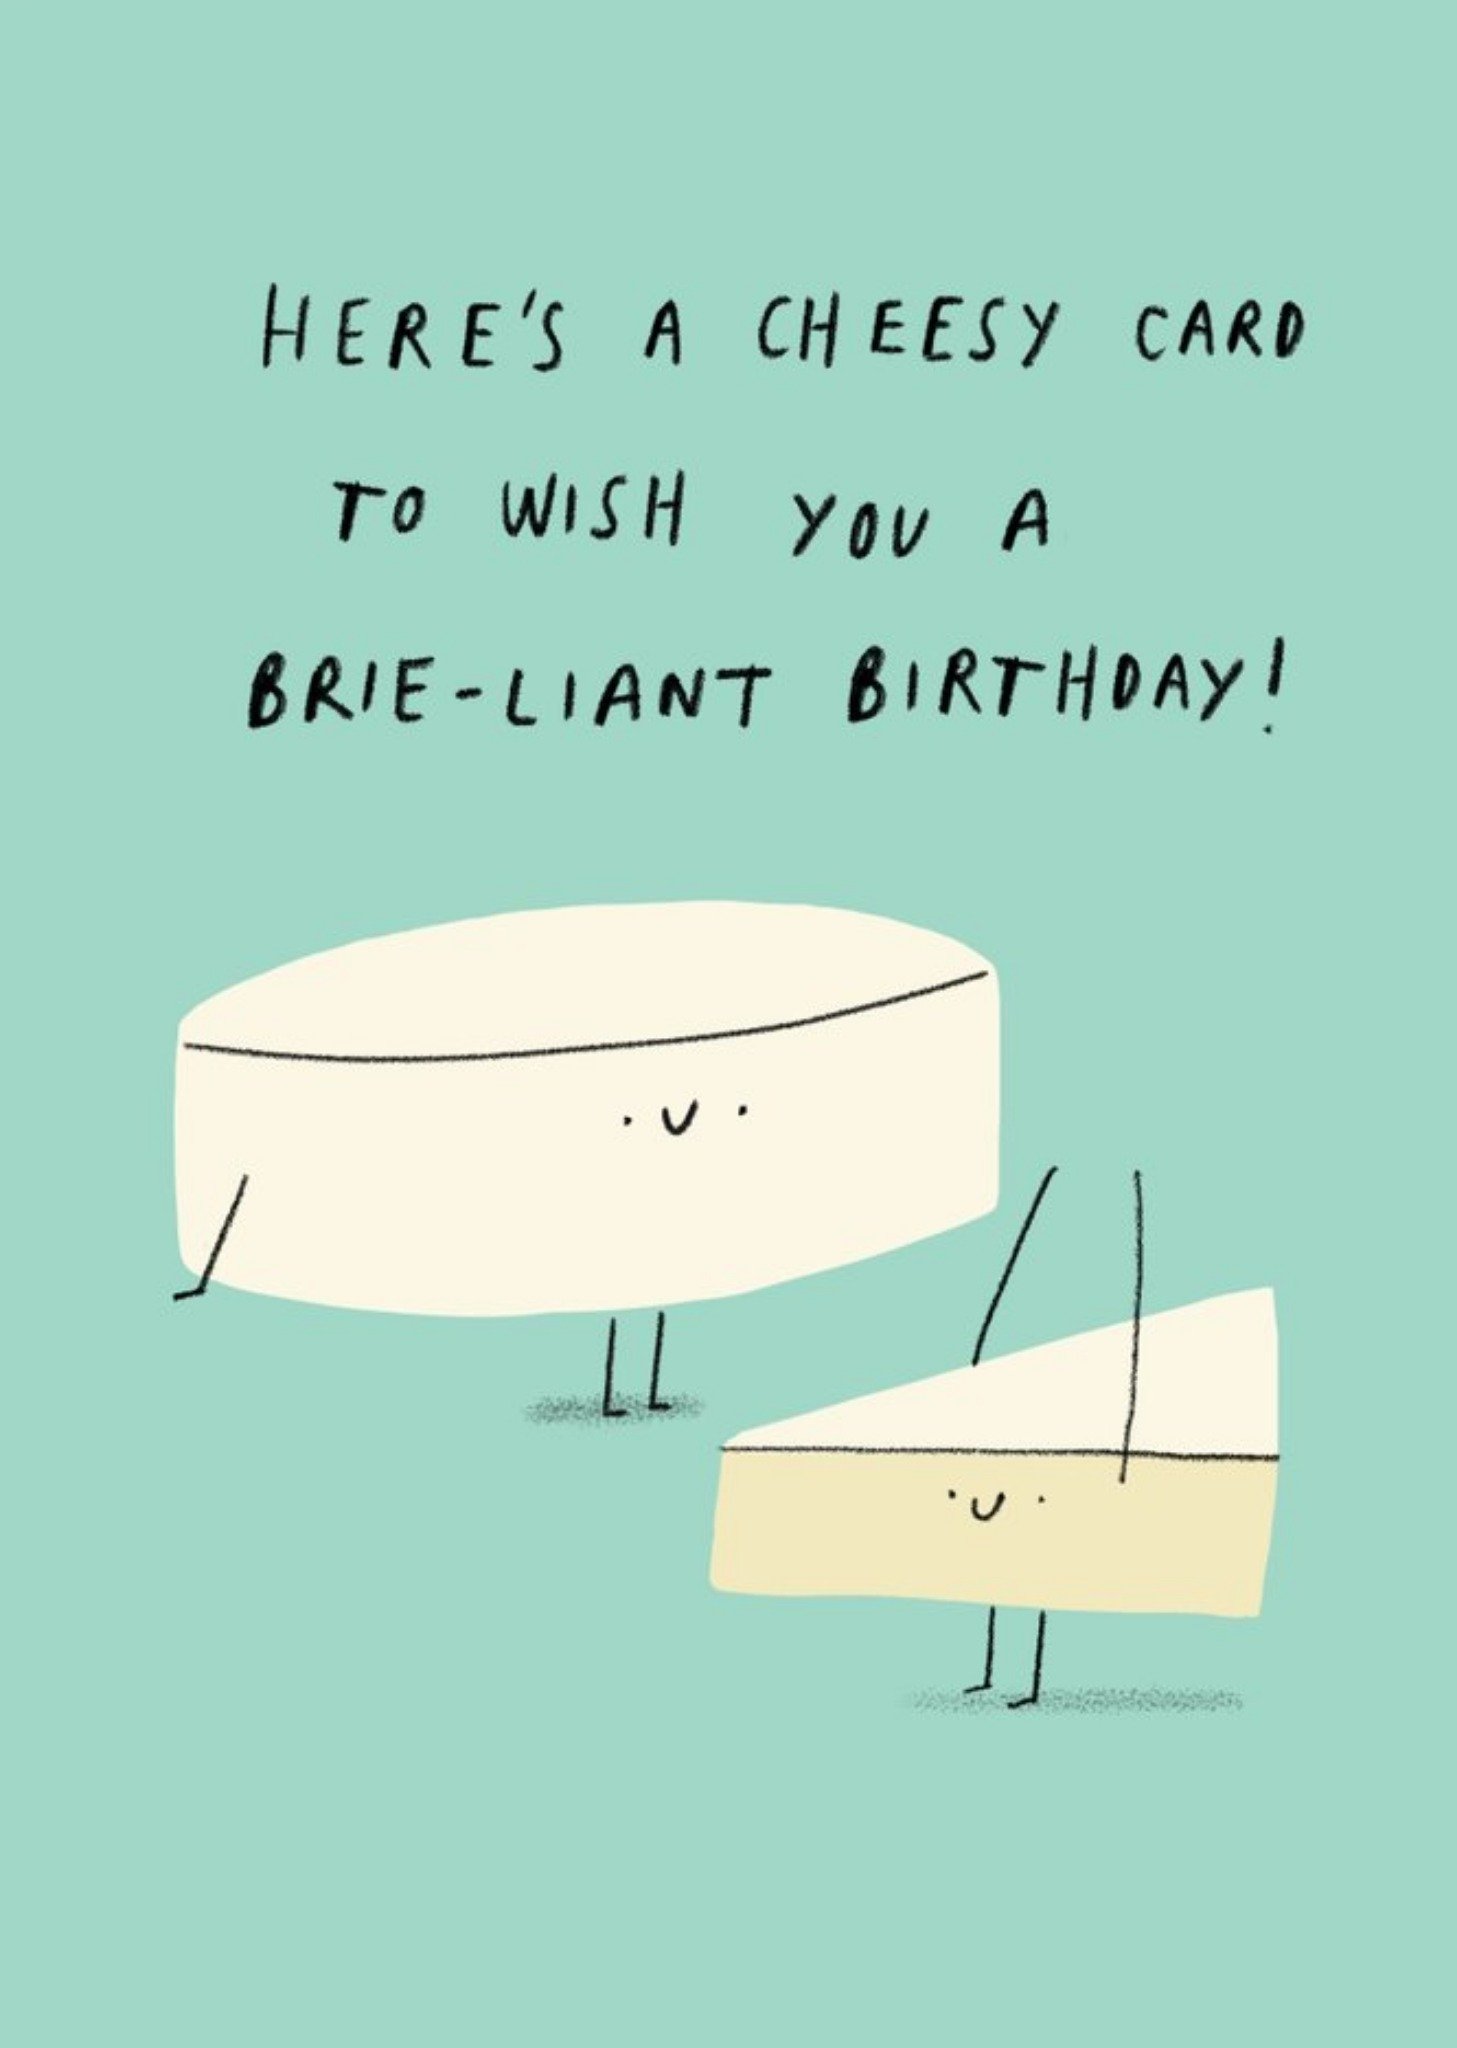 Moonpig Ukg Cheese Brie Birthday Card, Large